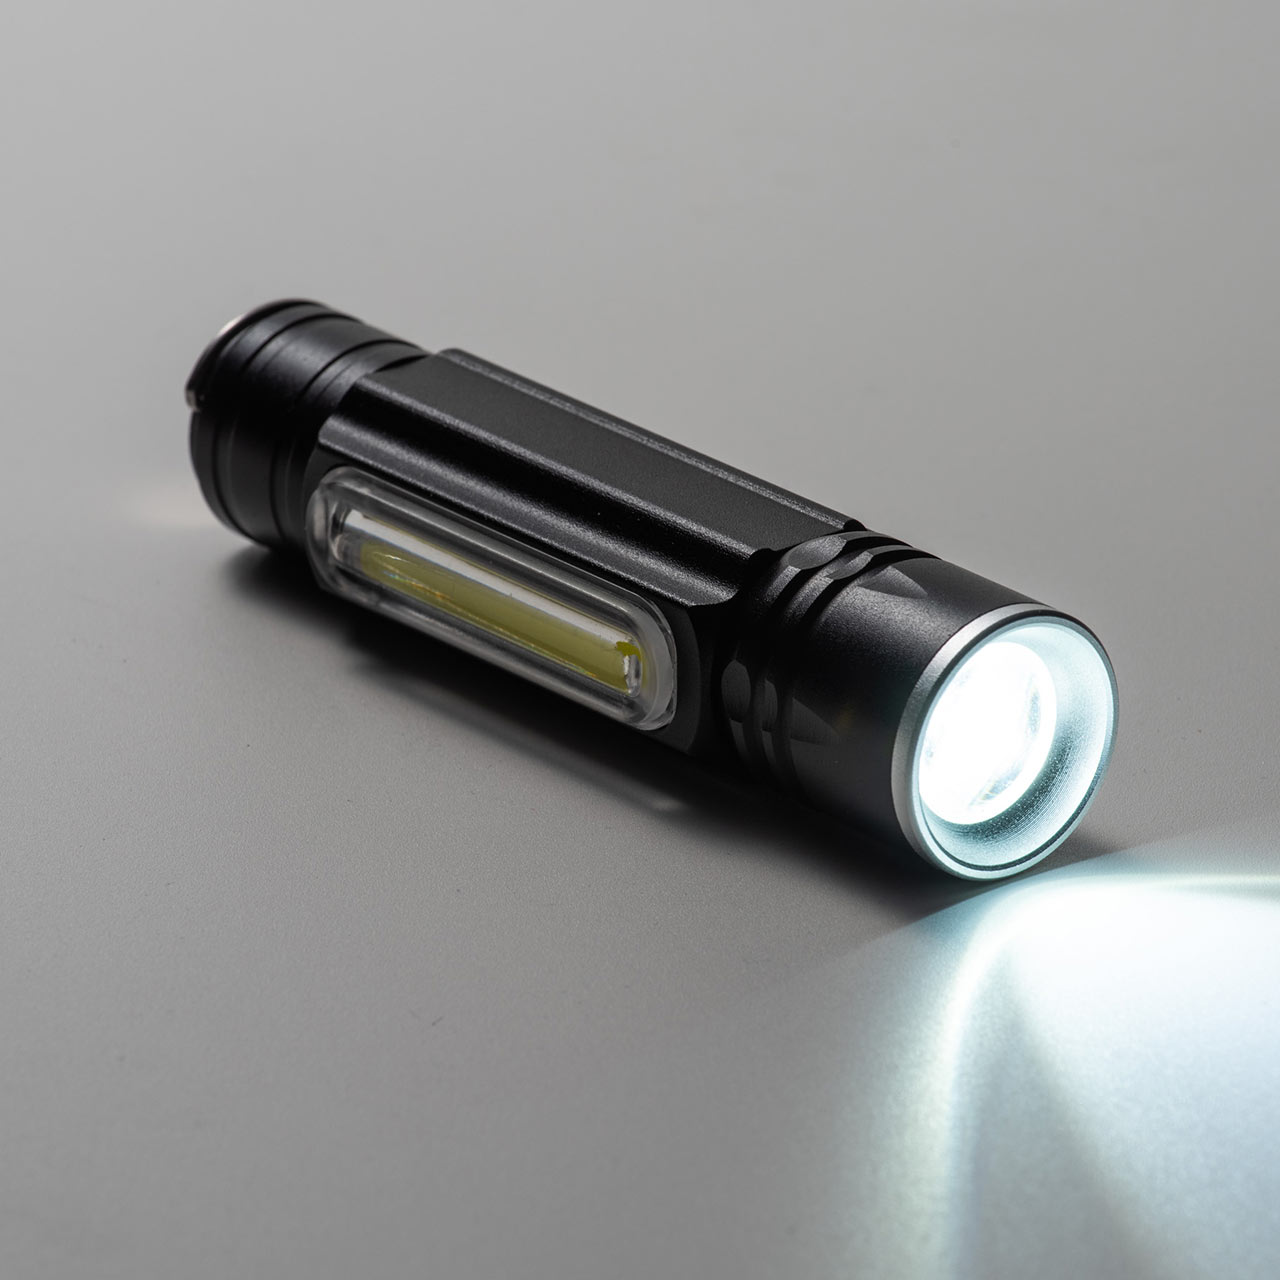 LEDライト USB充電式 防水 IPX4 最大180ルーメン 小型 ハンディライト COBチップ マグネット 吊り下げフック内蔵 [800-LED028]